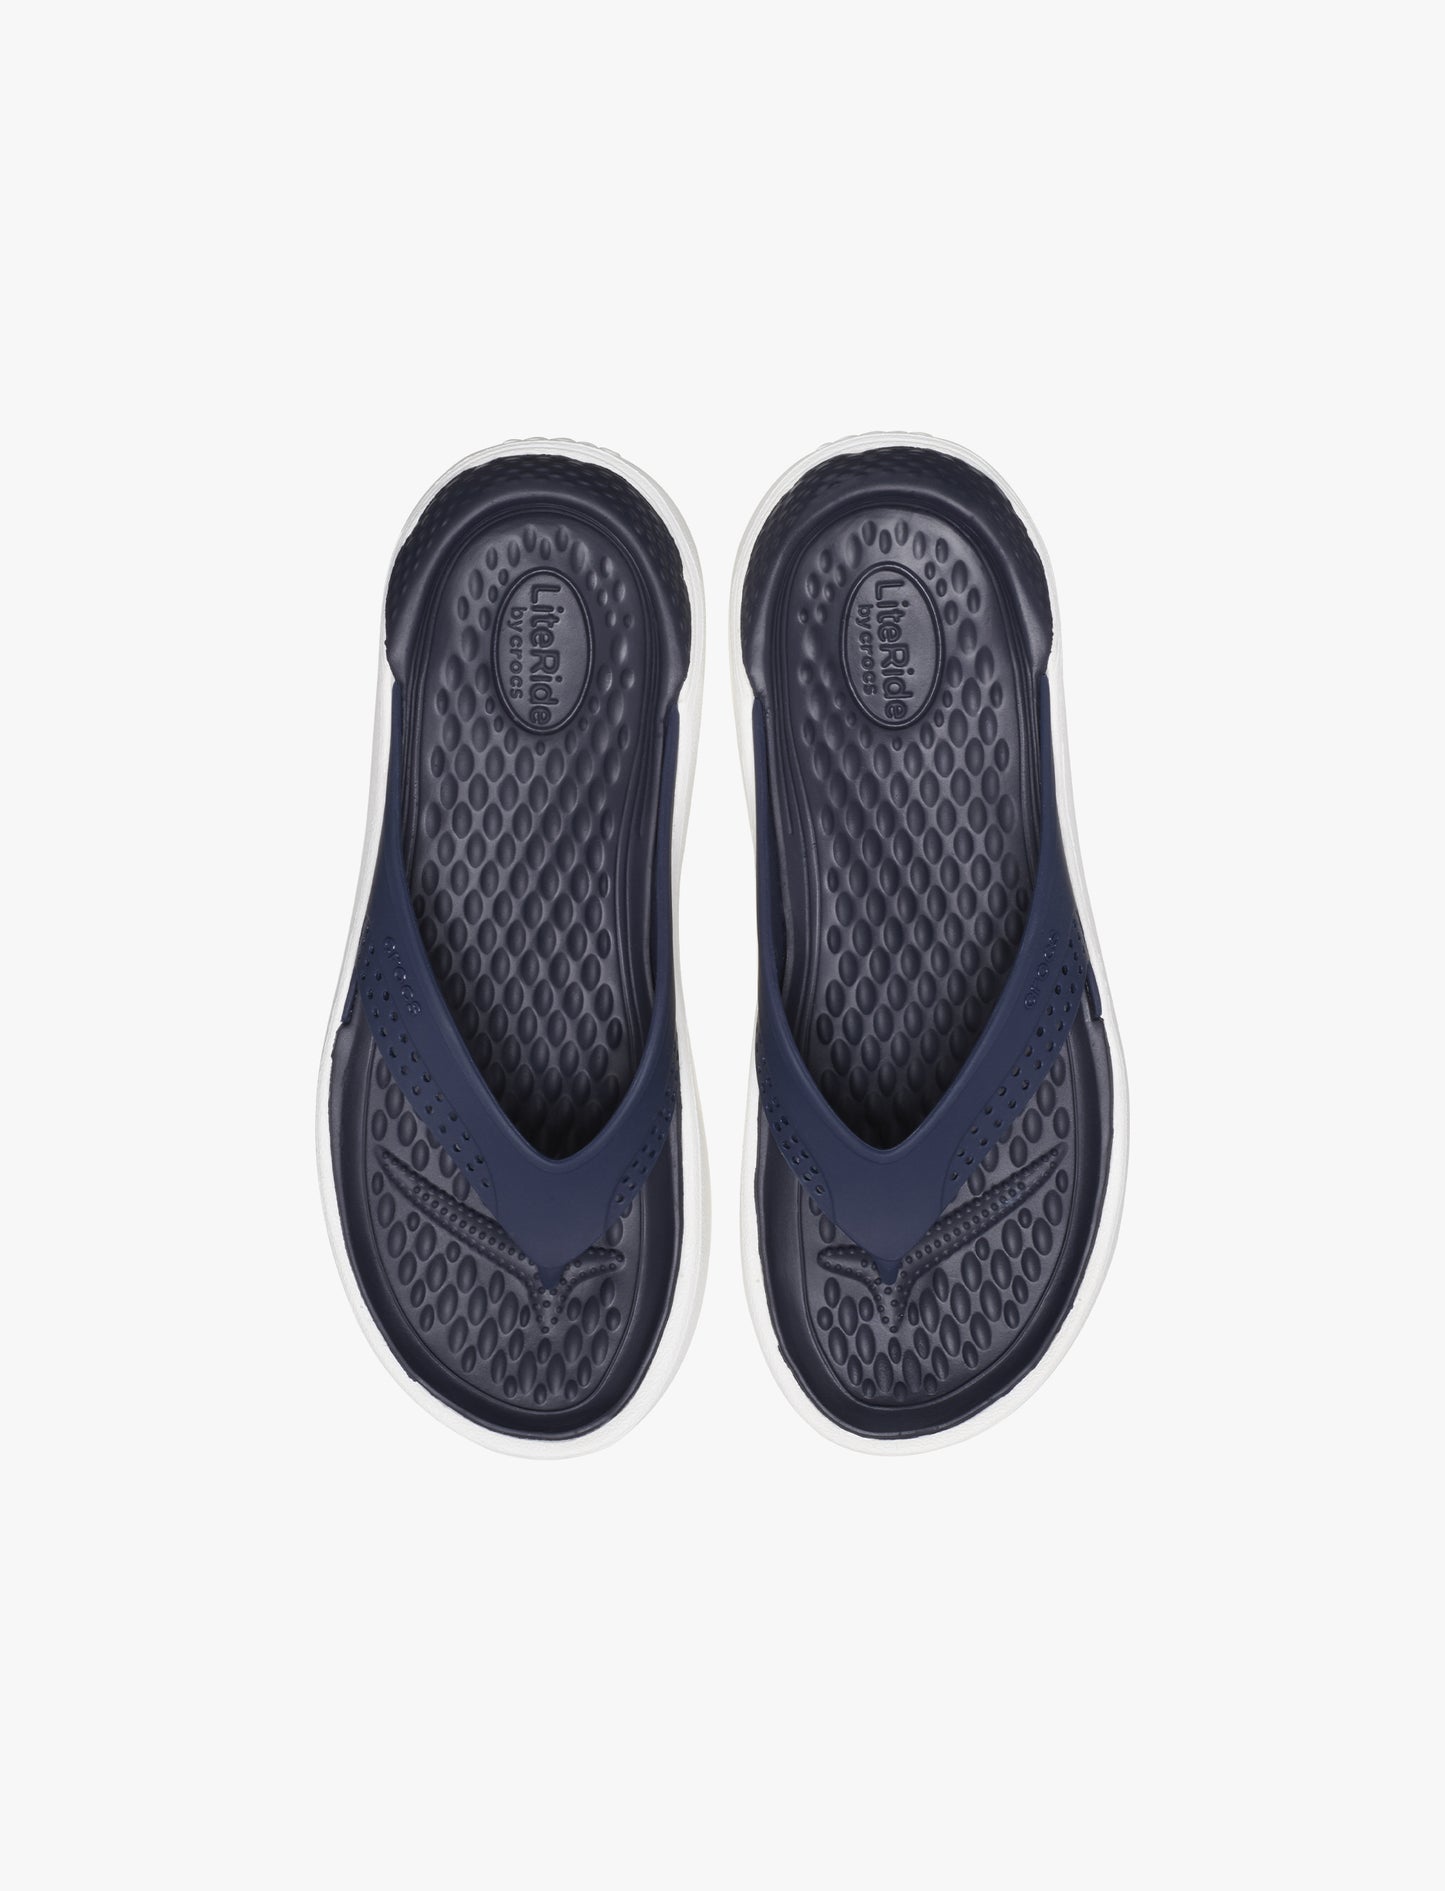 Crocs LiteRide Flip - נעלי אצבע קרוקס לייט-רייד